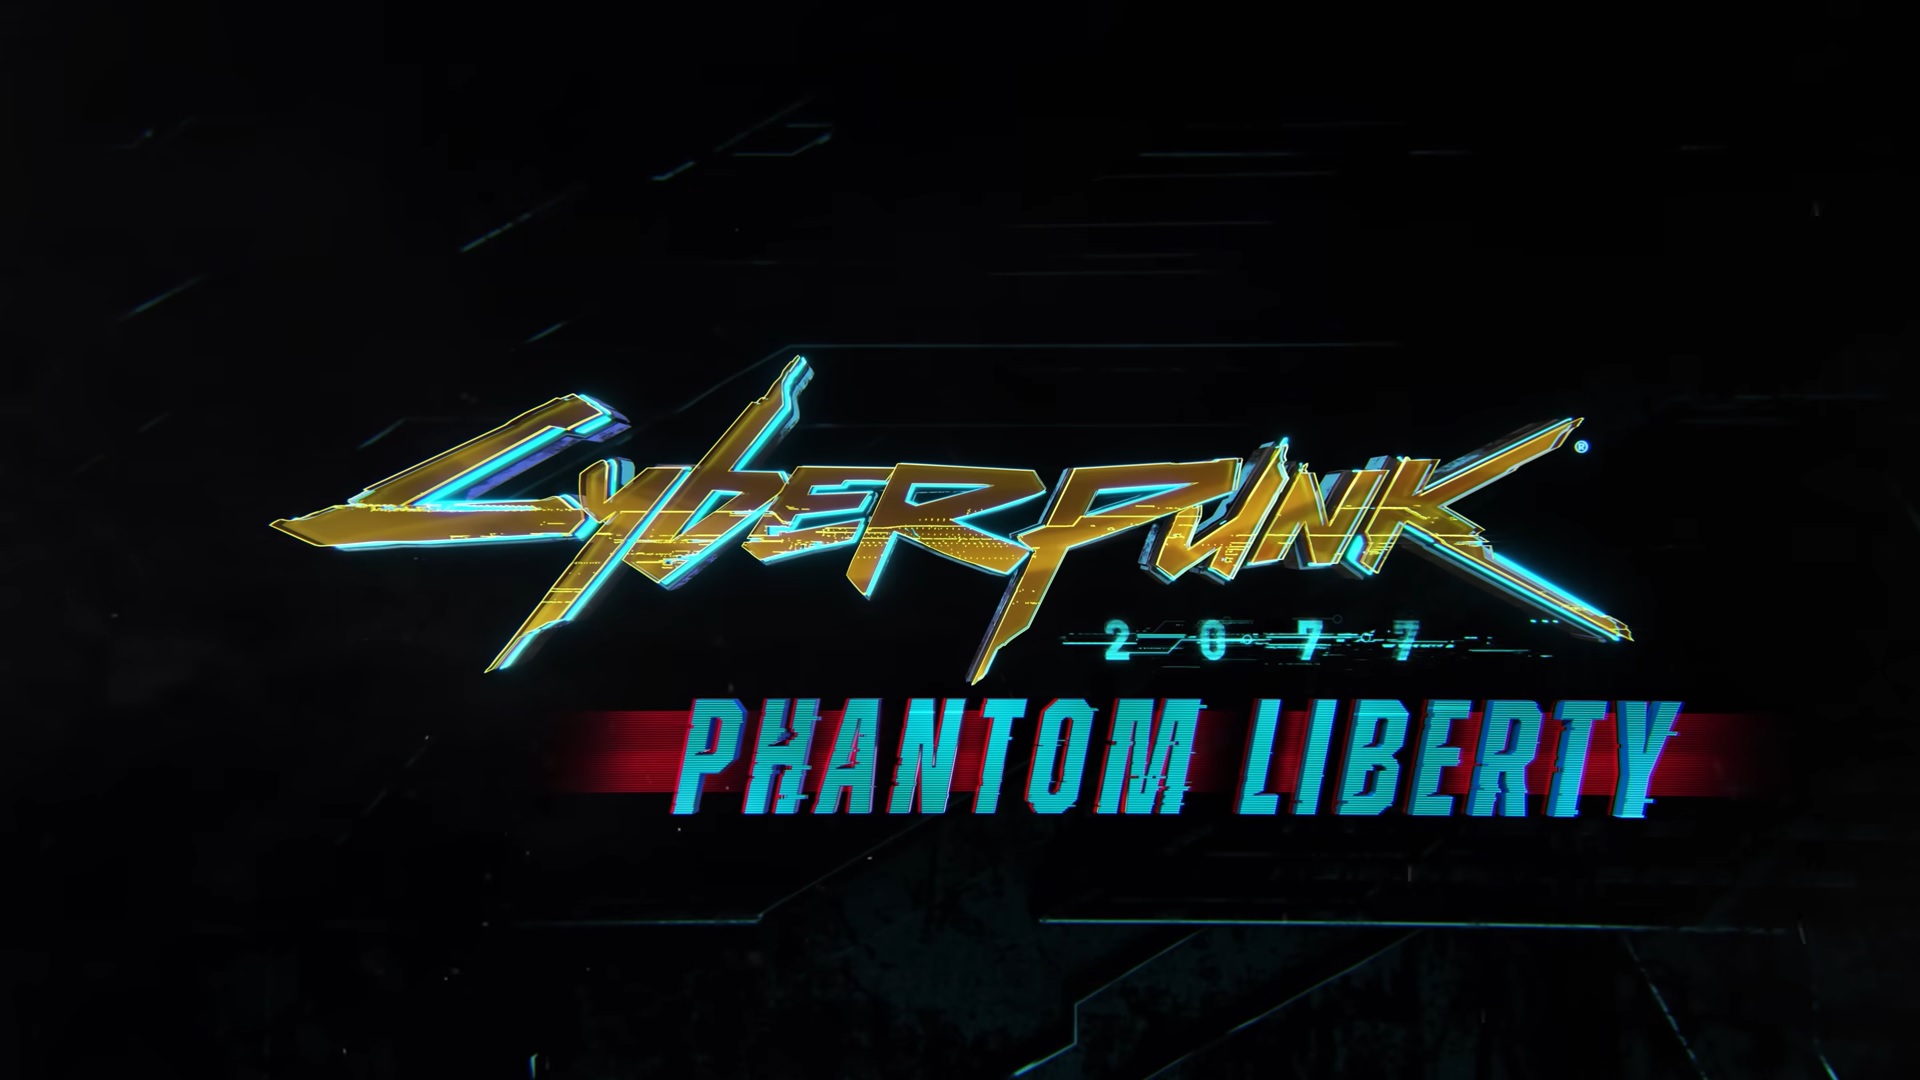 CD Projekt RED เปิดตัวเนื้อหาเสริม Phantom Liberty ของ Cyberpunk 2077 และข้อมูลแพตช์ 1.6 เชื่อมโยงอนิเมะ Edgerunners